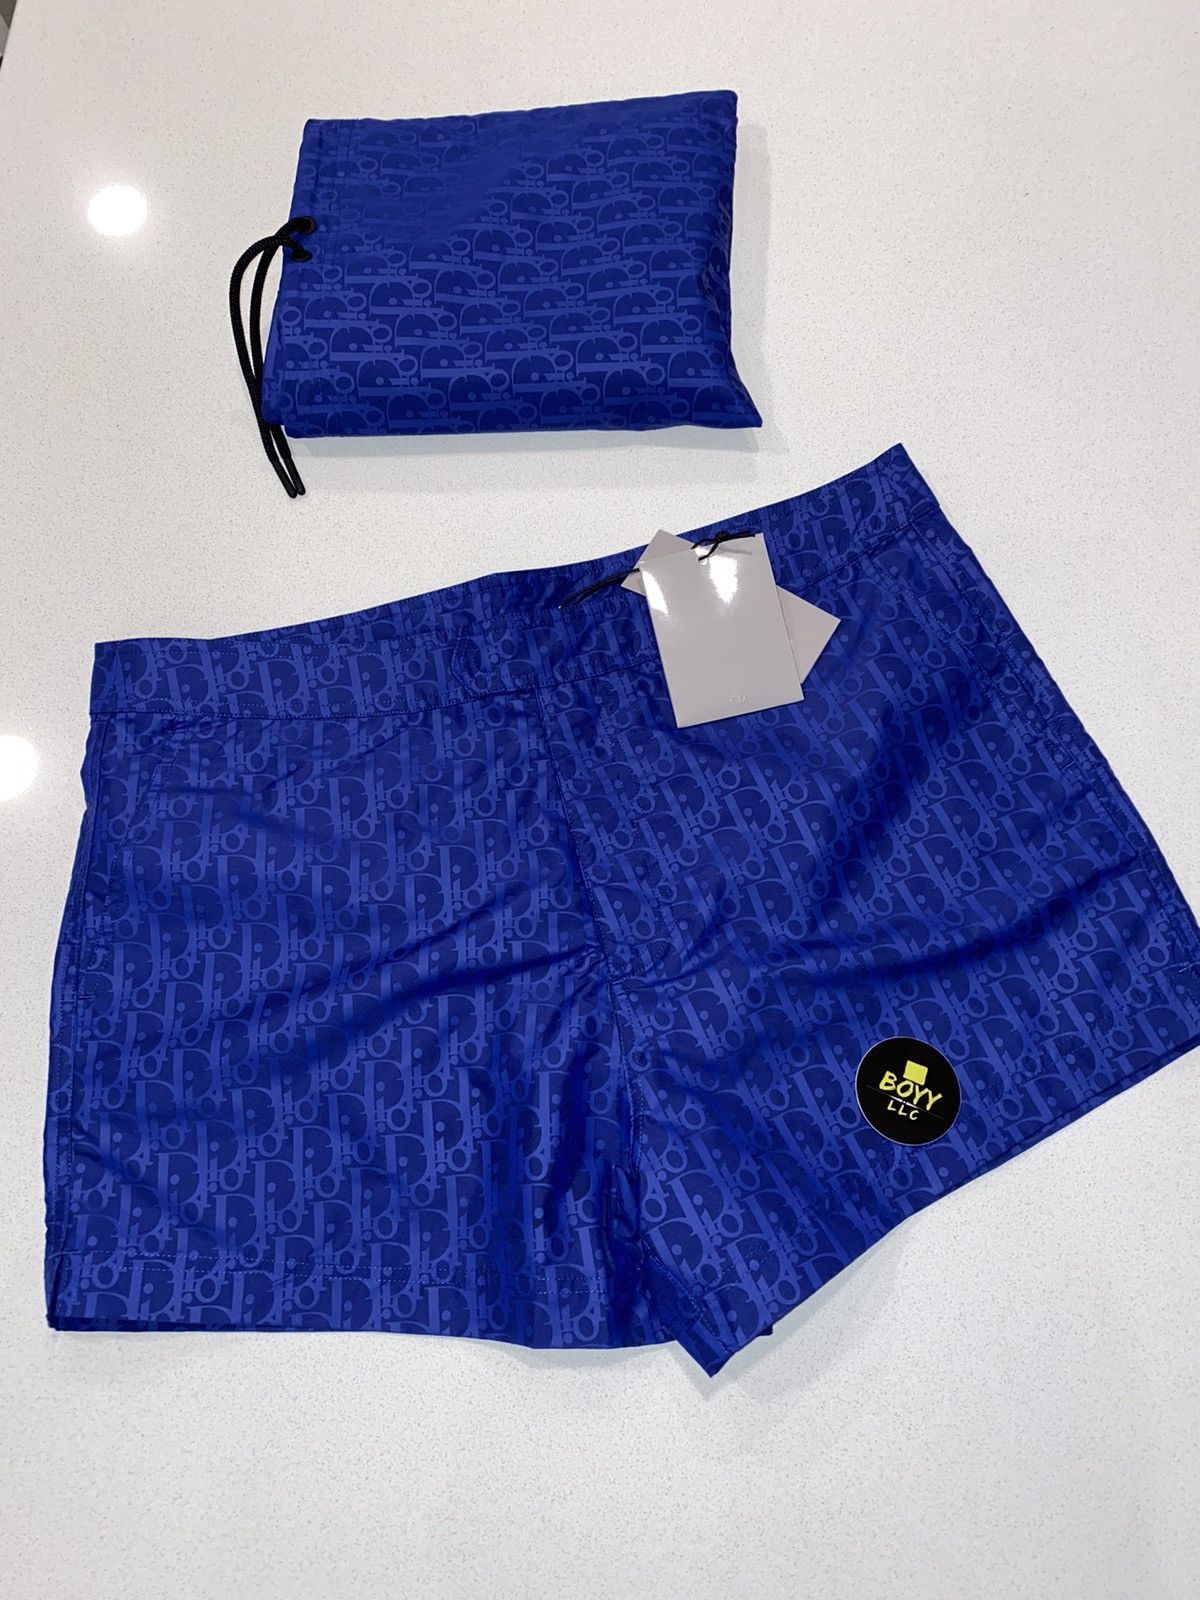 Dior Oblique Swim Shorts Deep Green Technical Fabric